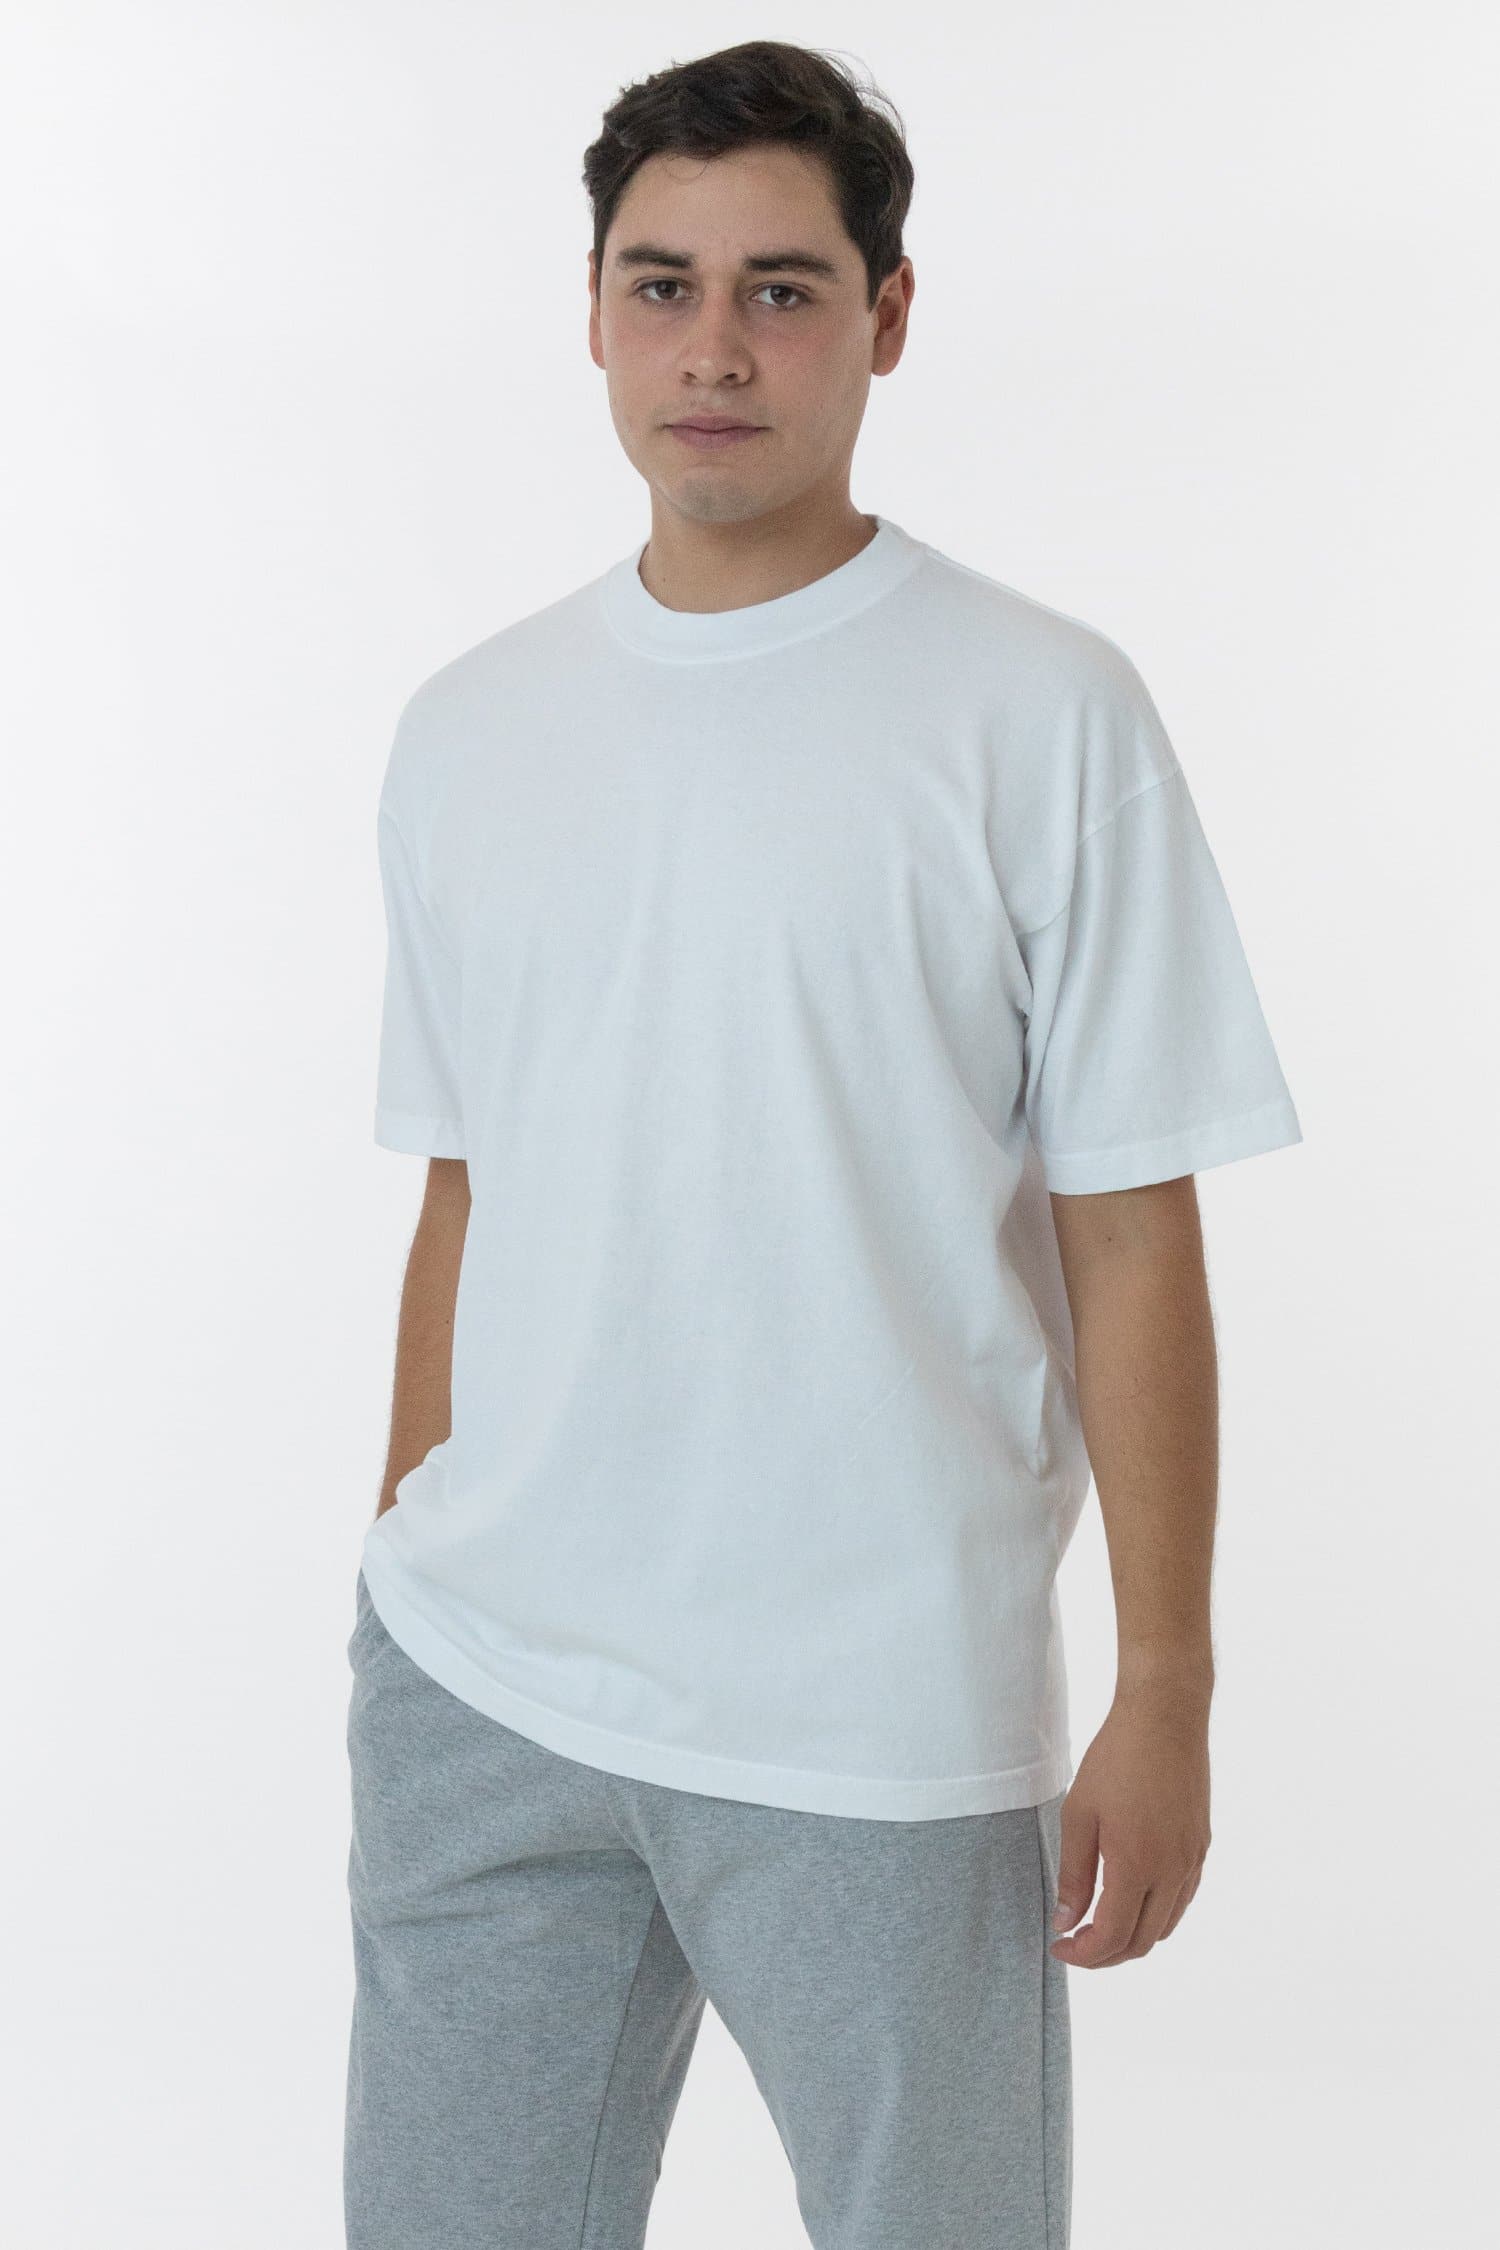 Los Angeles Apparel 6.5 oz. Garment Dye Crewneck T-Shirt | Regular Size | La Apparel White / S